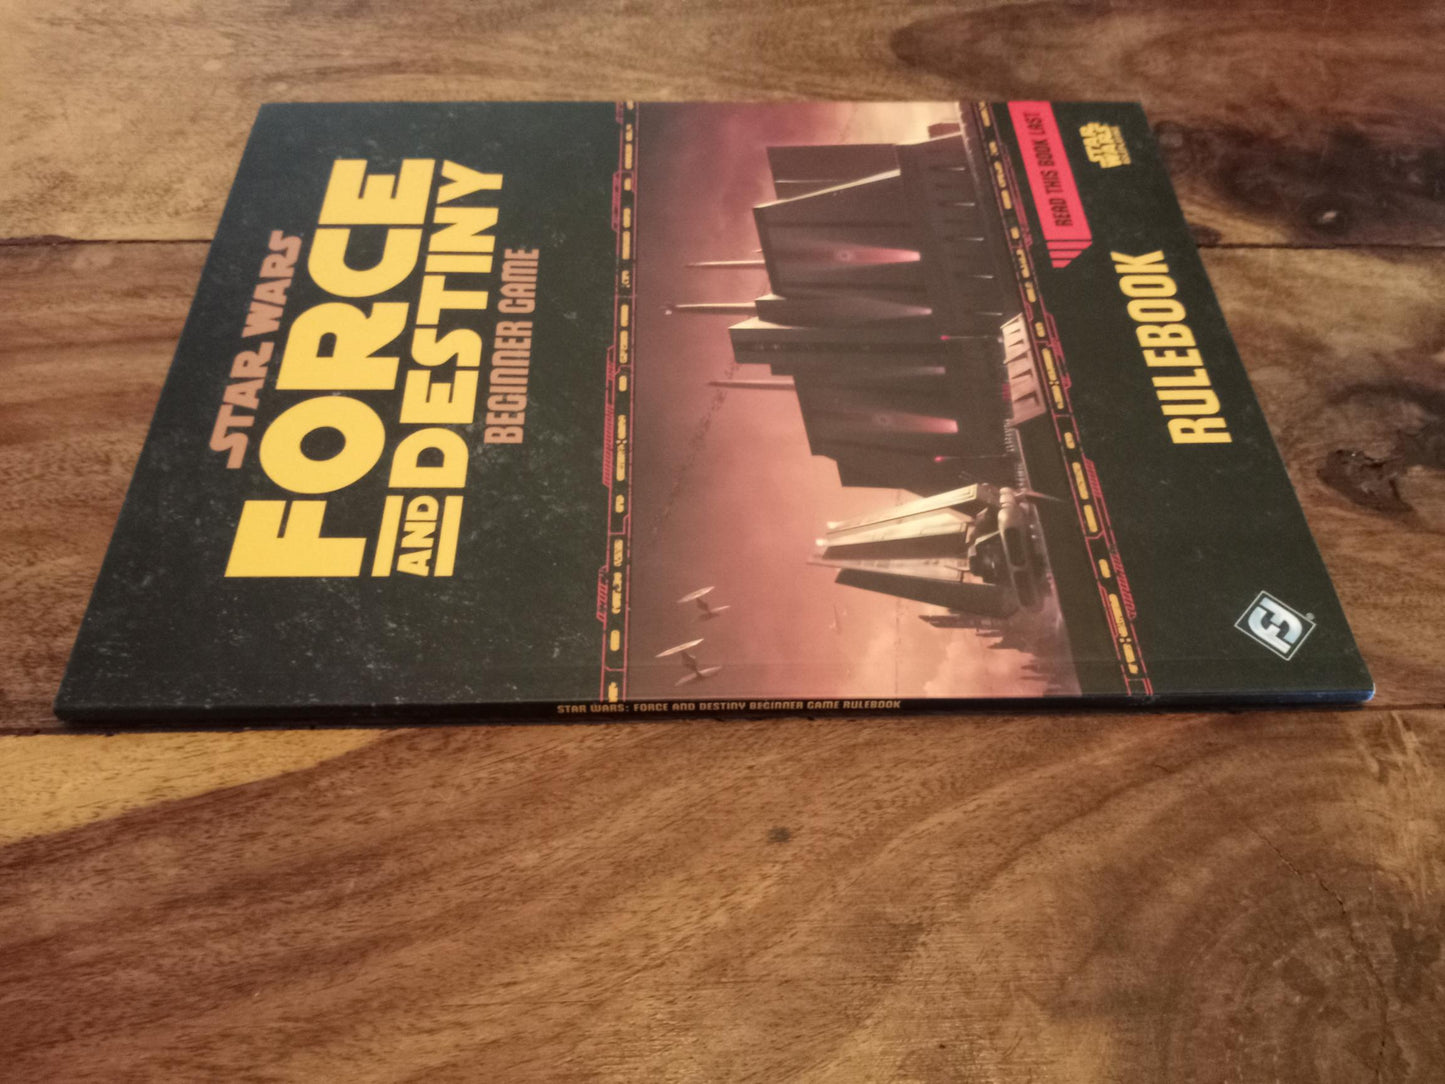 Star Wars Force and Destiny Beginner Game Rulebook Booklet